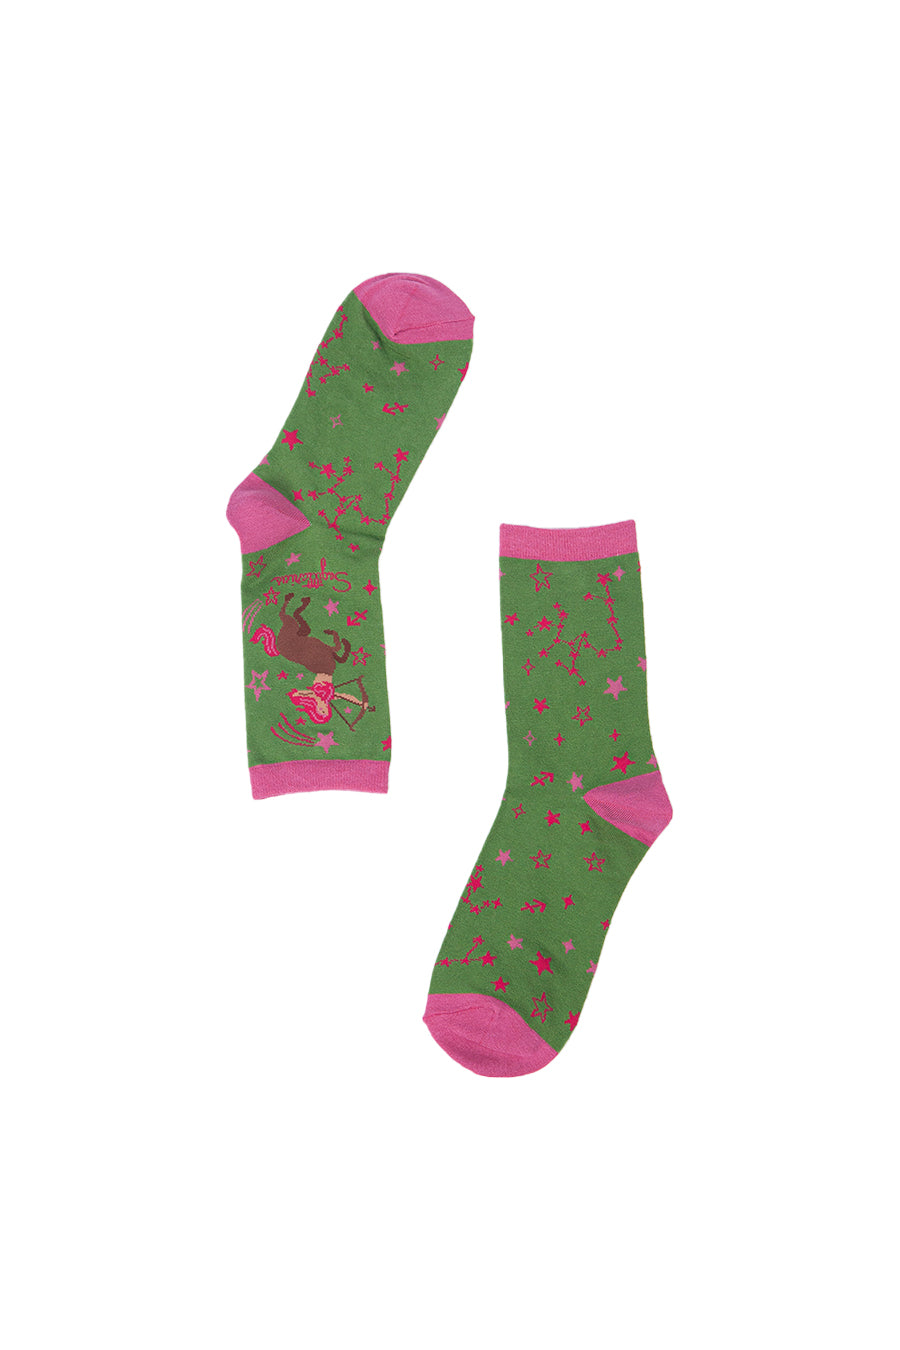 green, pink bamboo socks with zodiac sign sagittarius